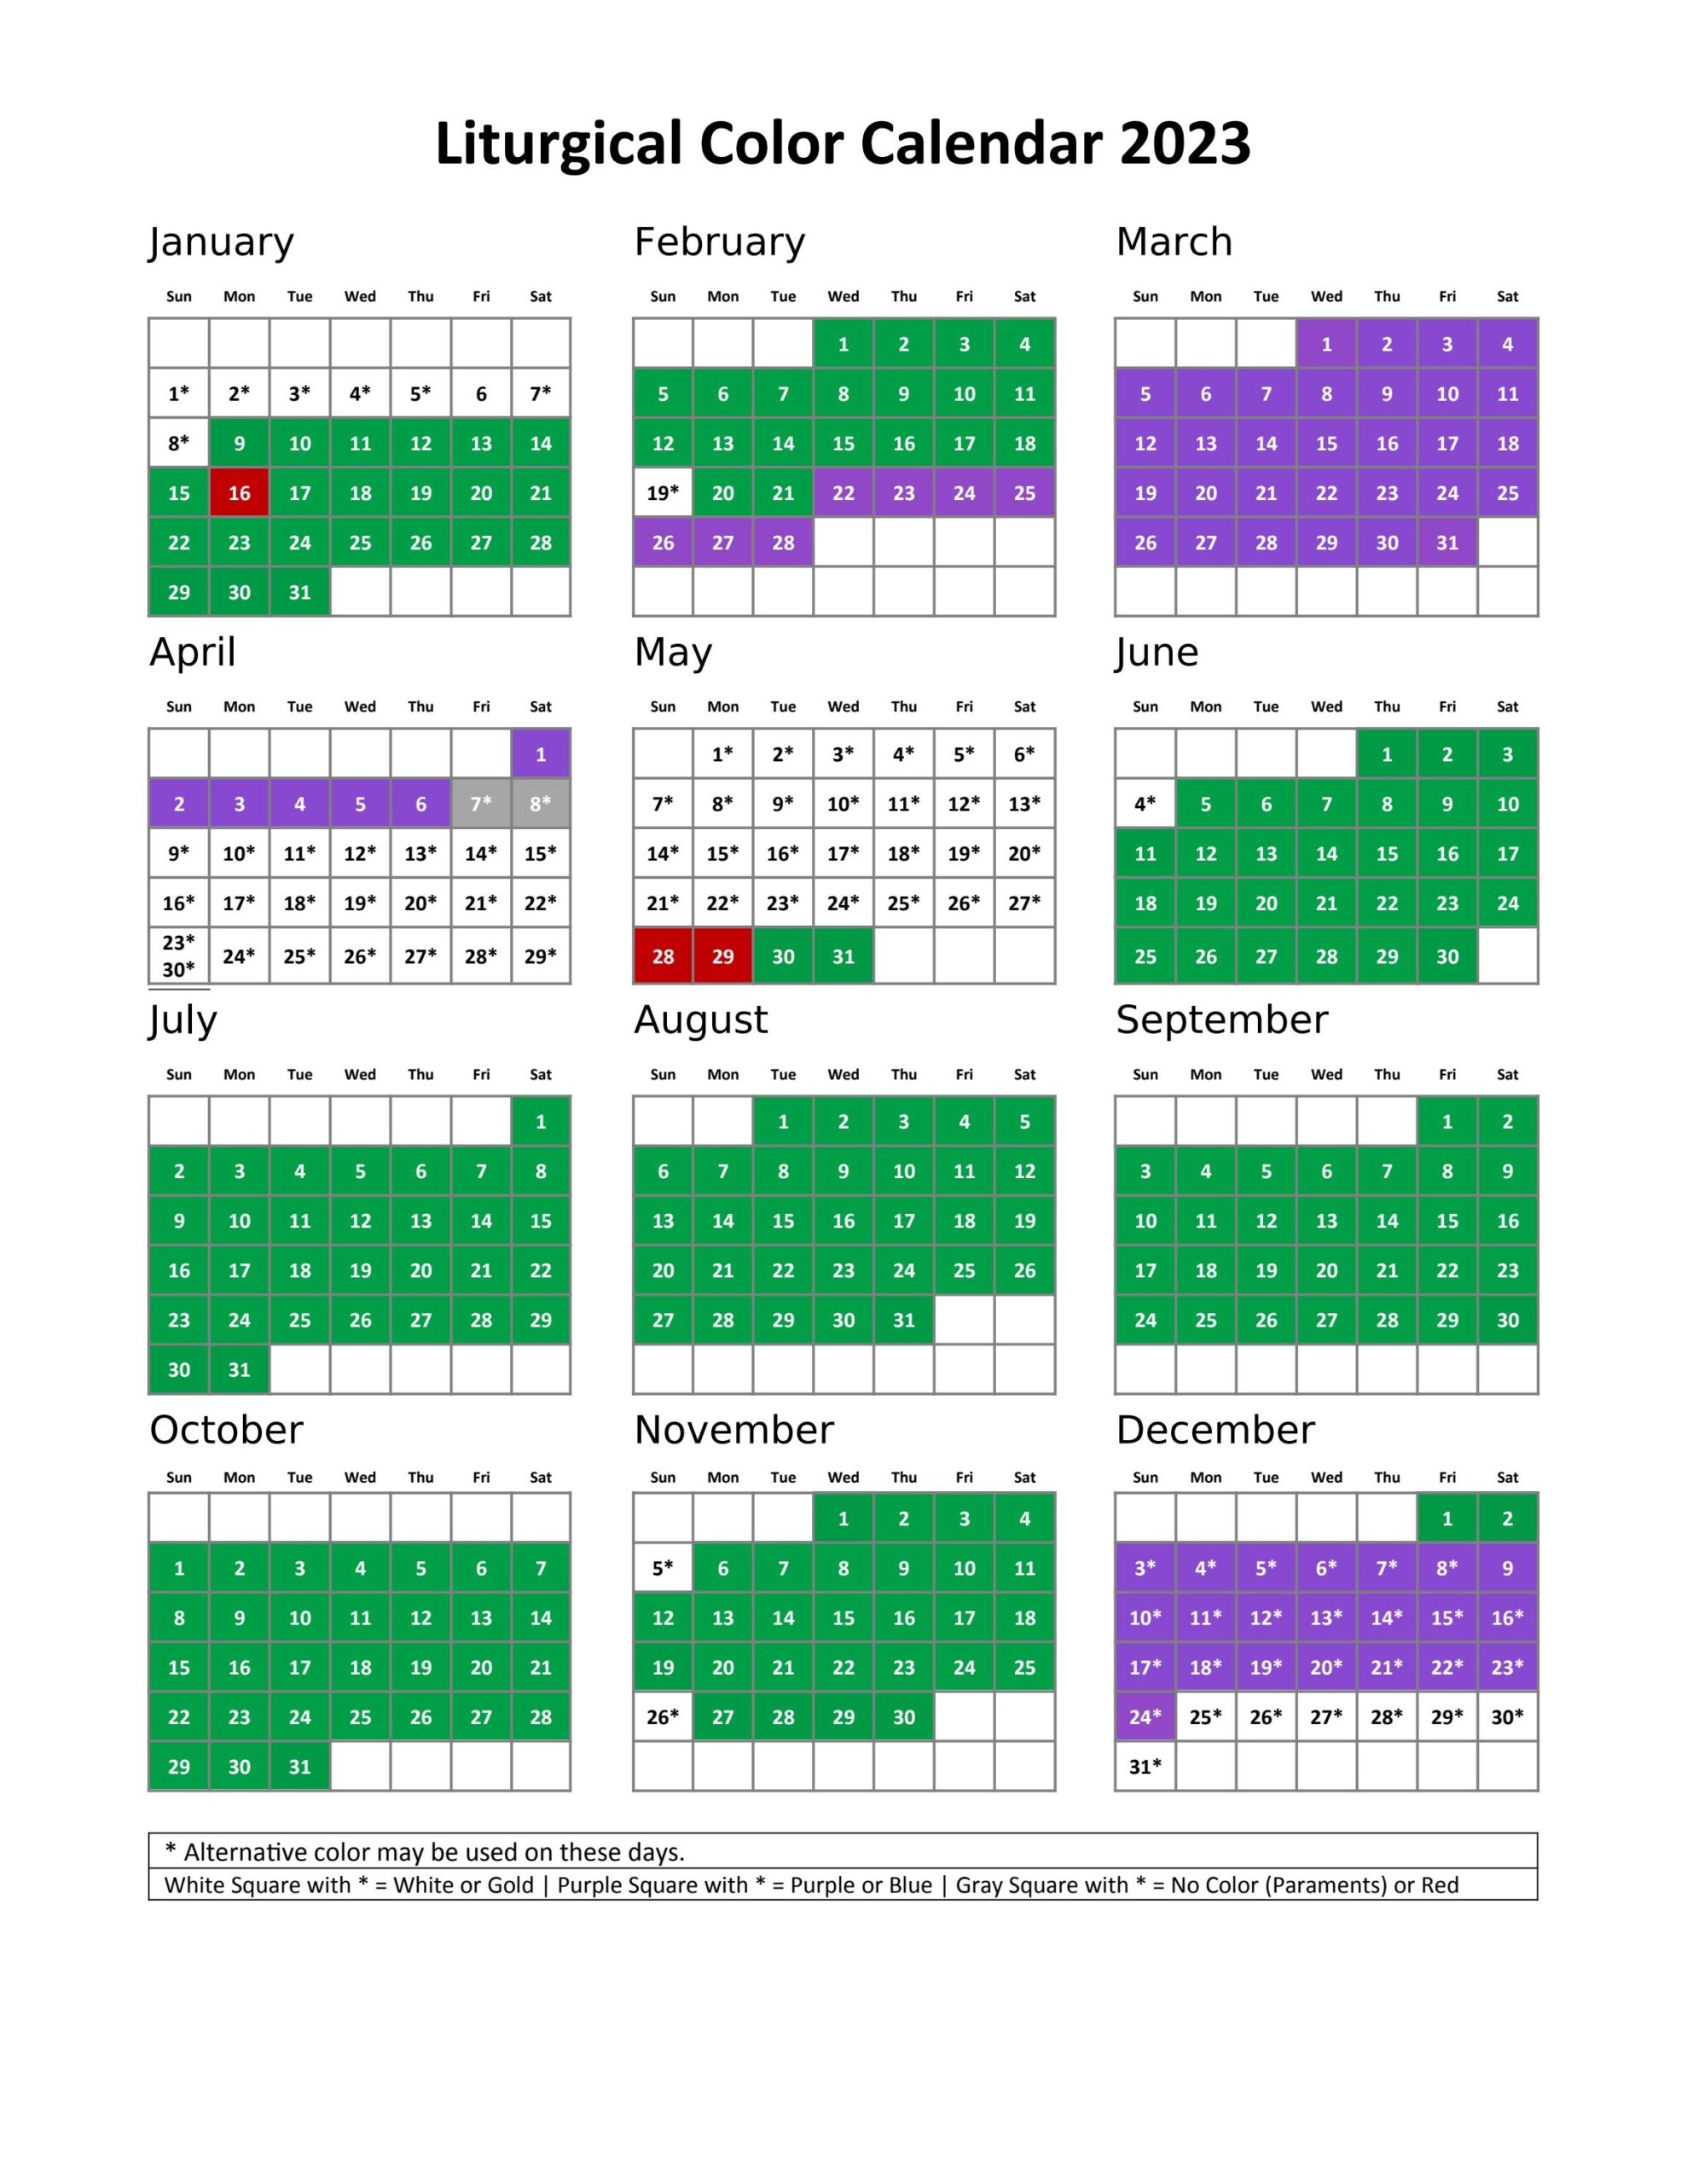 Liturgical Color Calendar 2023 By United Methodist Publishing House Cokesbury Issuu